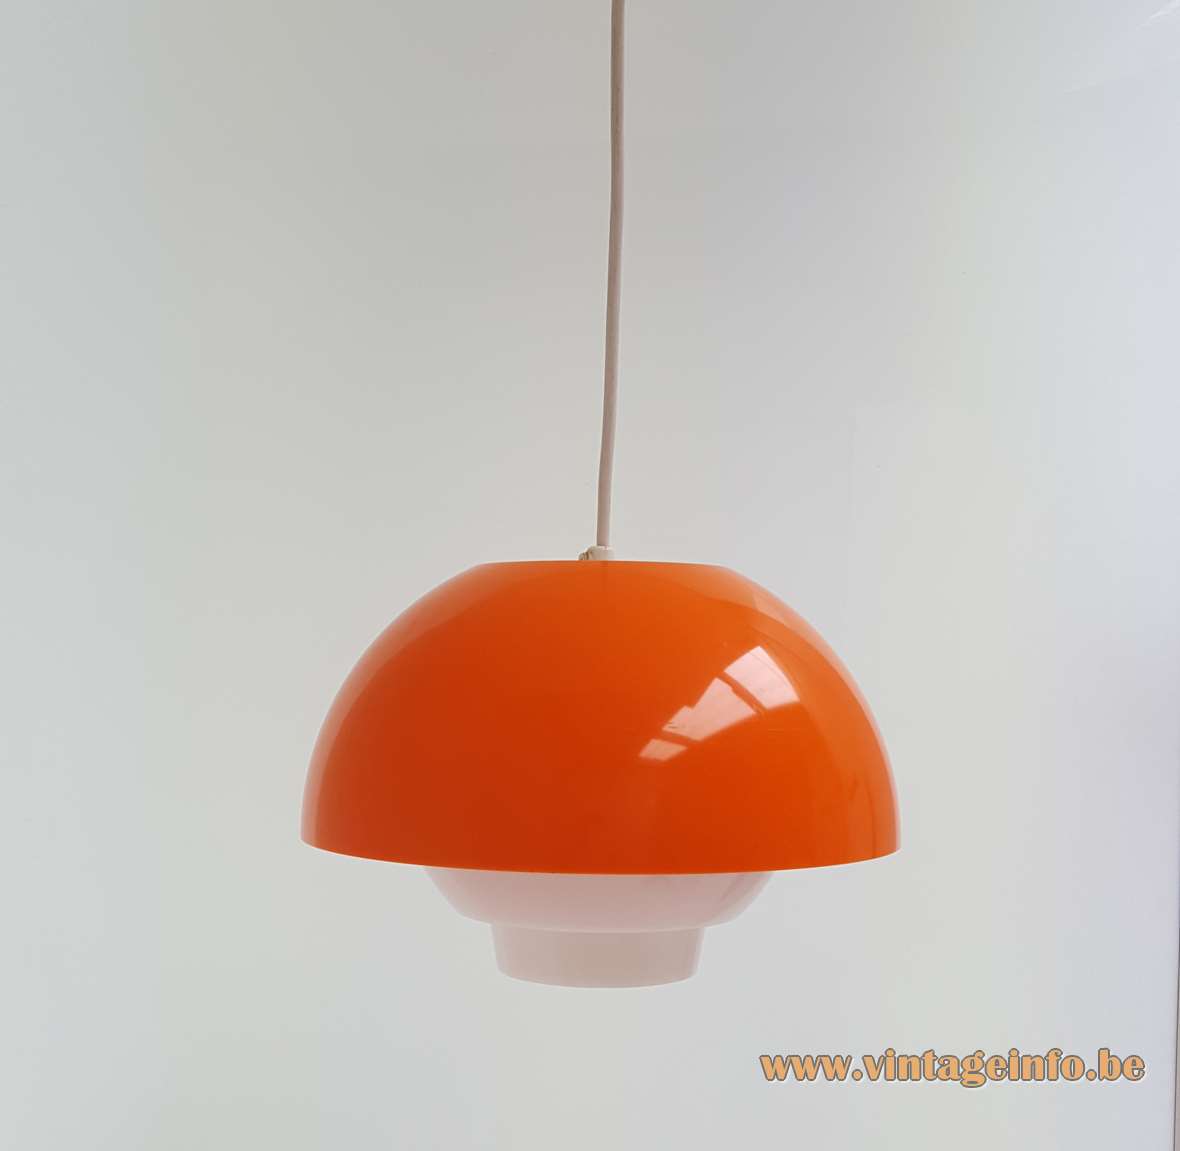 Bent Karlby Ergo pendant lamp orange acrylic plastic lampshade white diffuser ASK Belysninger Denmark 1970s